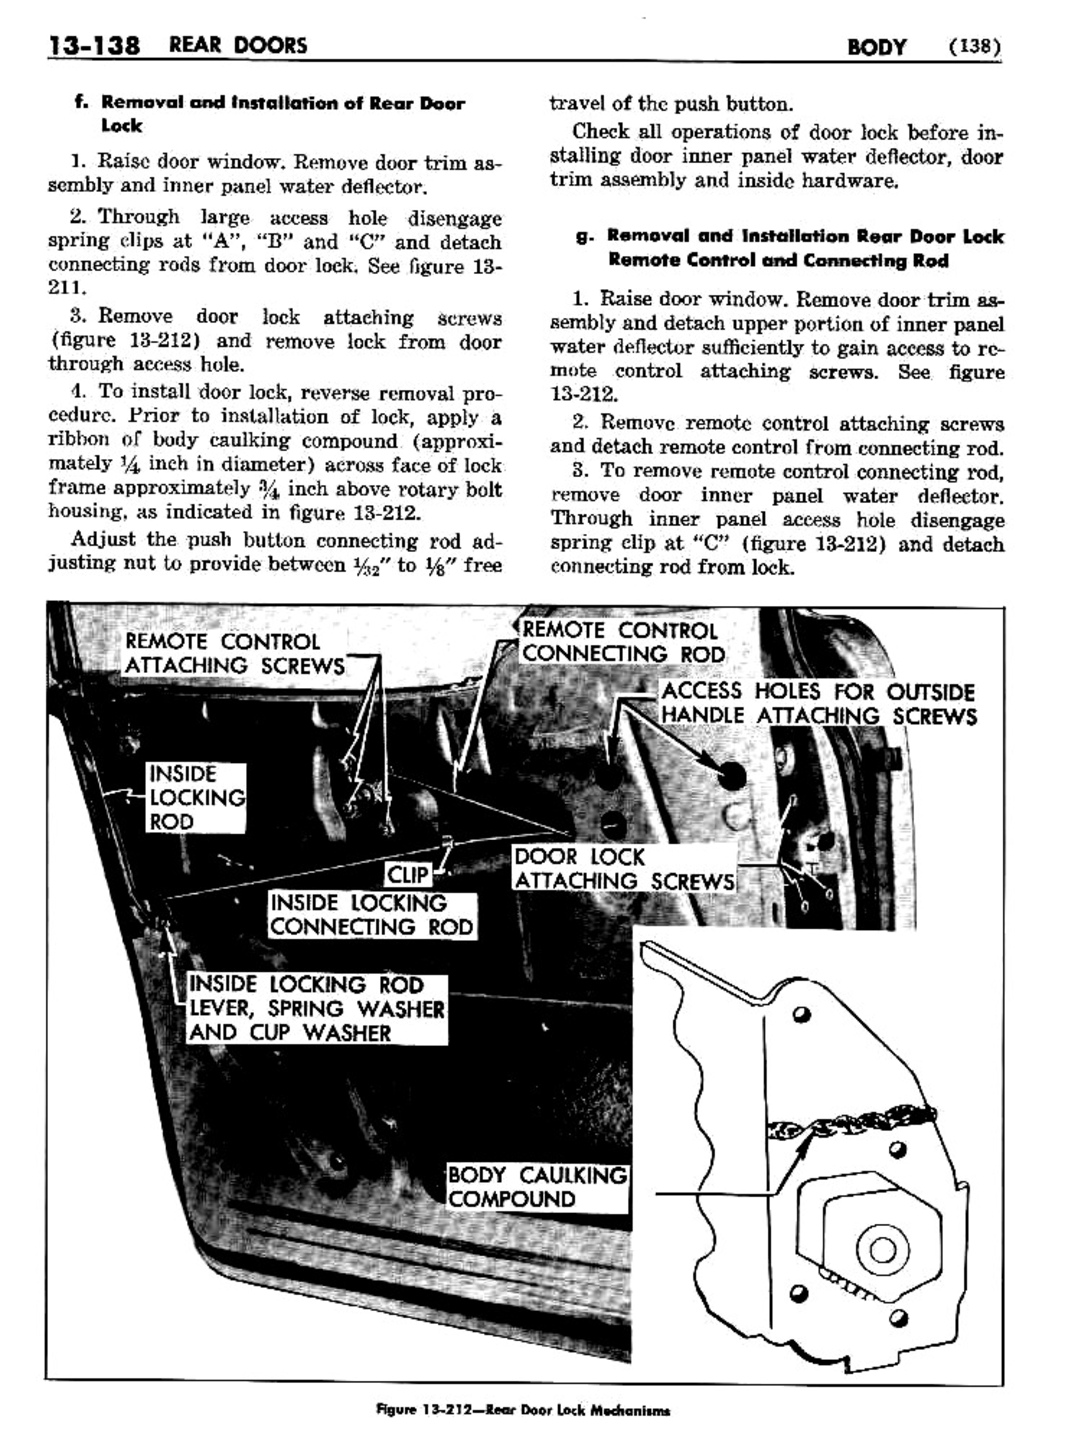 n_1957 Buick Body Service Manual-140-140.jpg